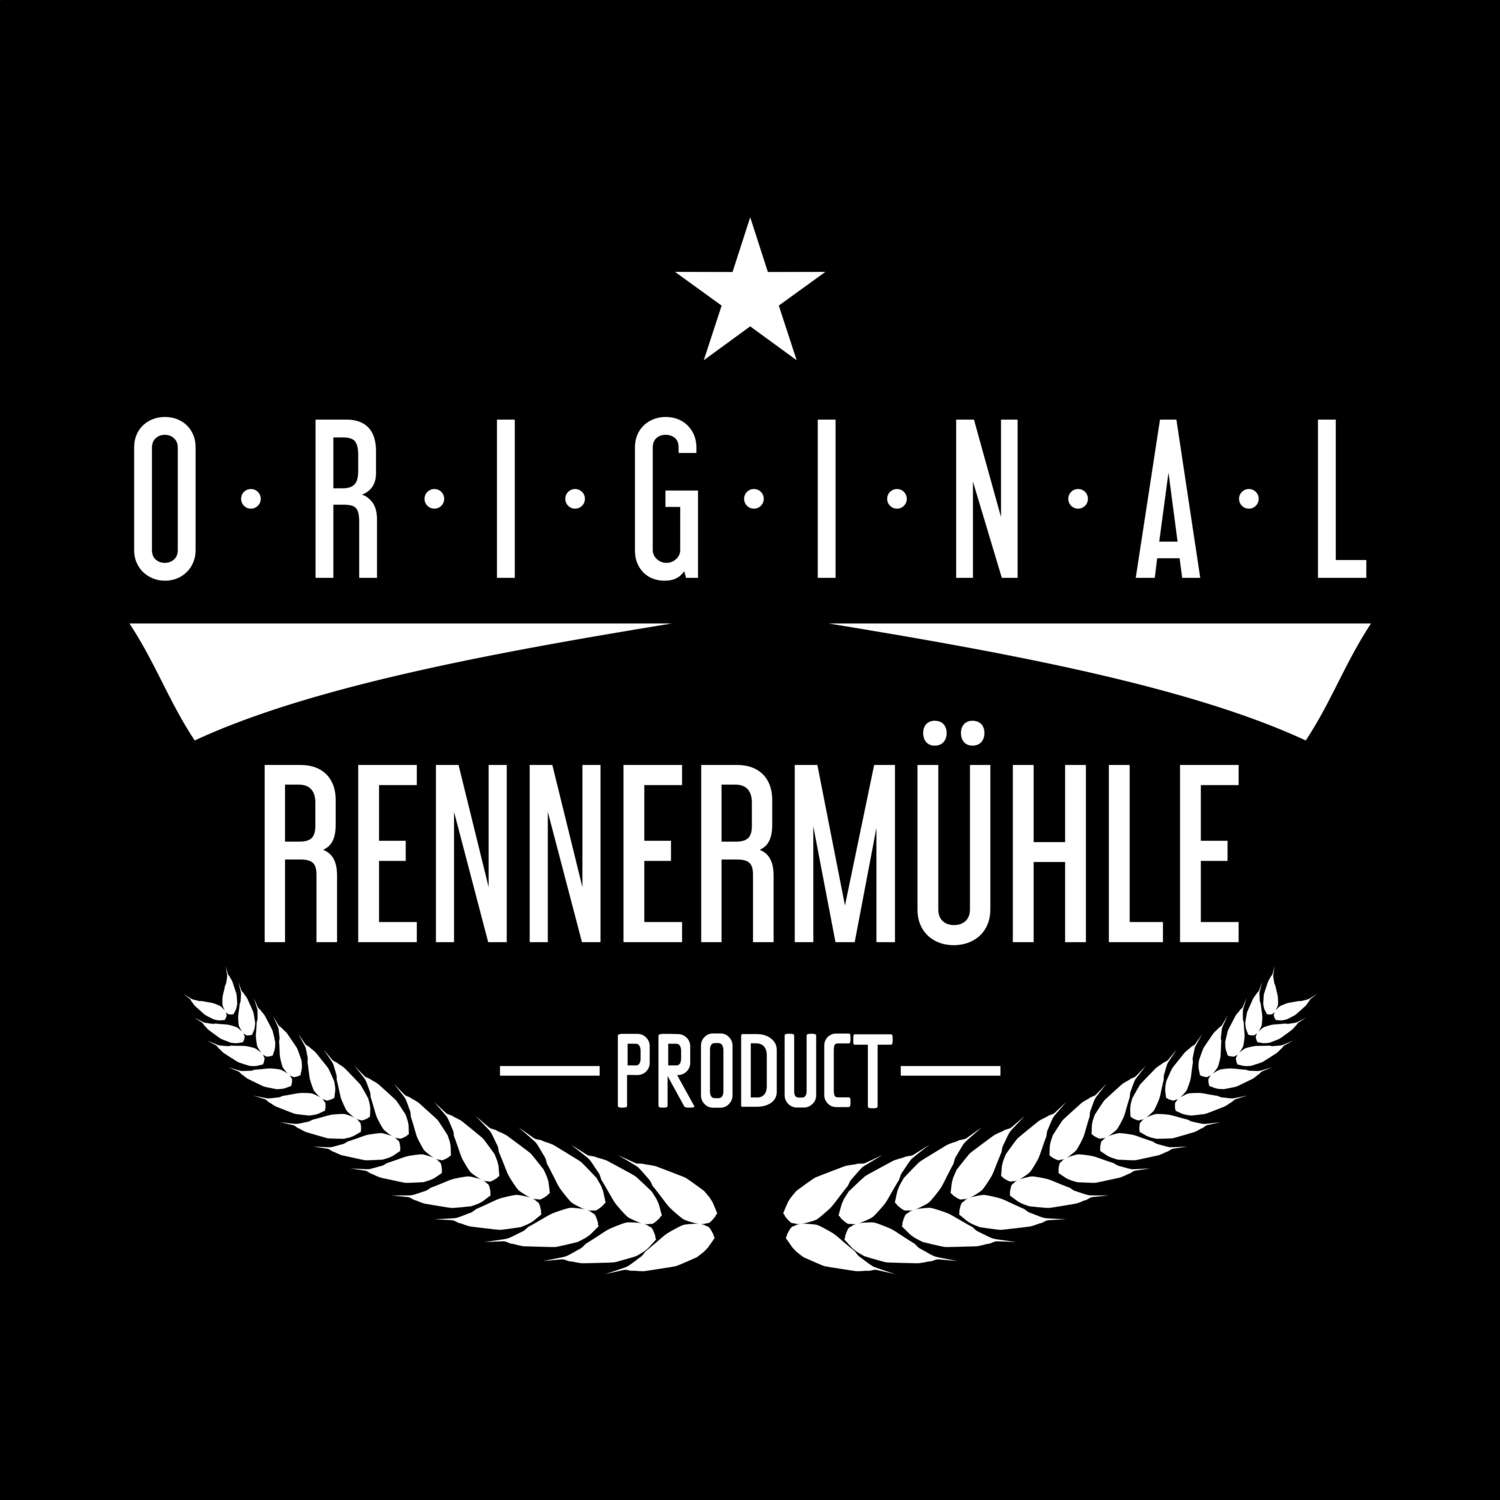 Rennermühle T-Shirt »Original Product«